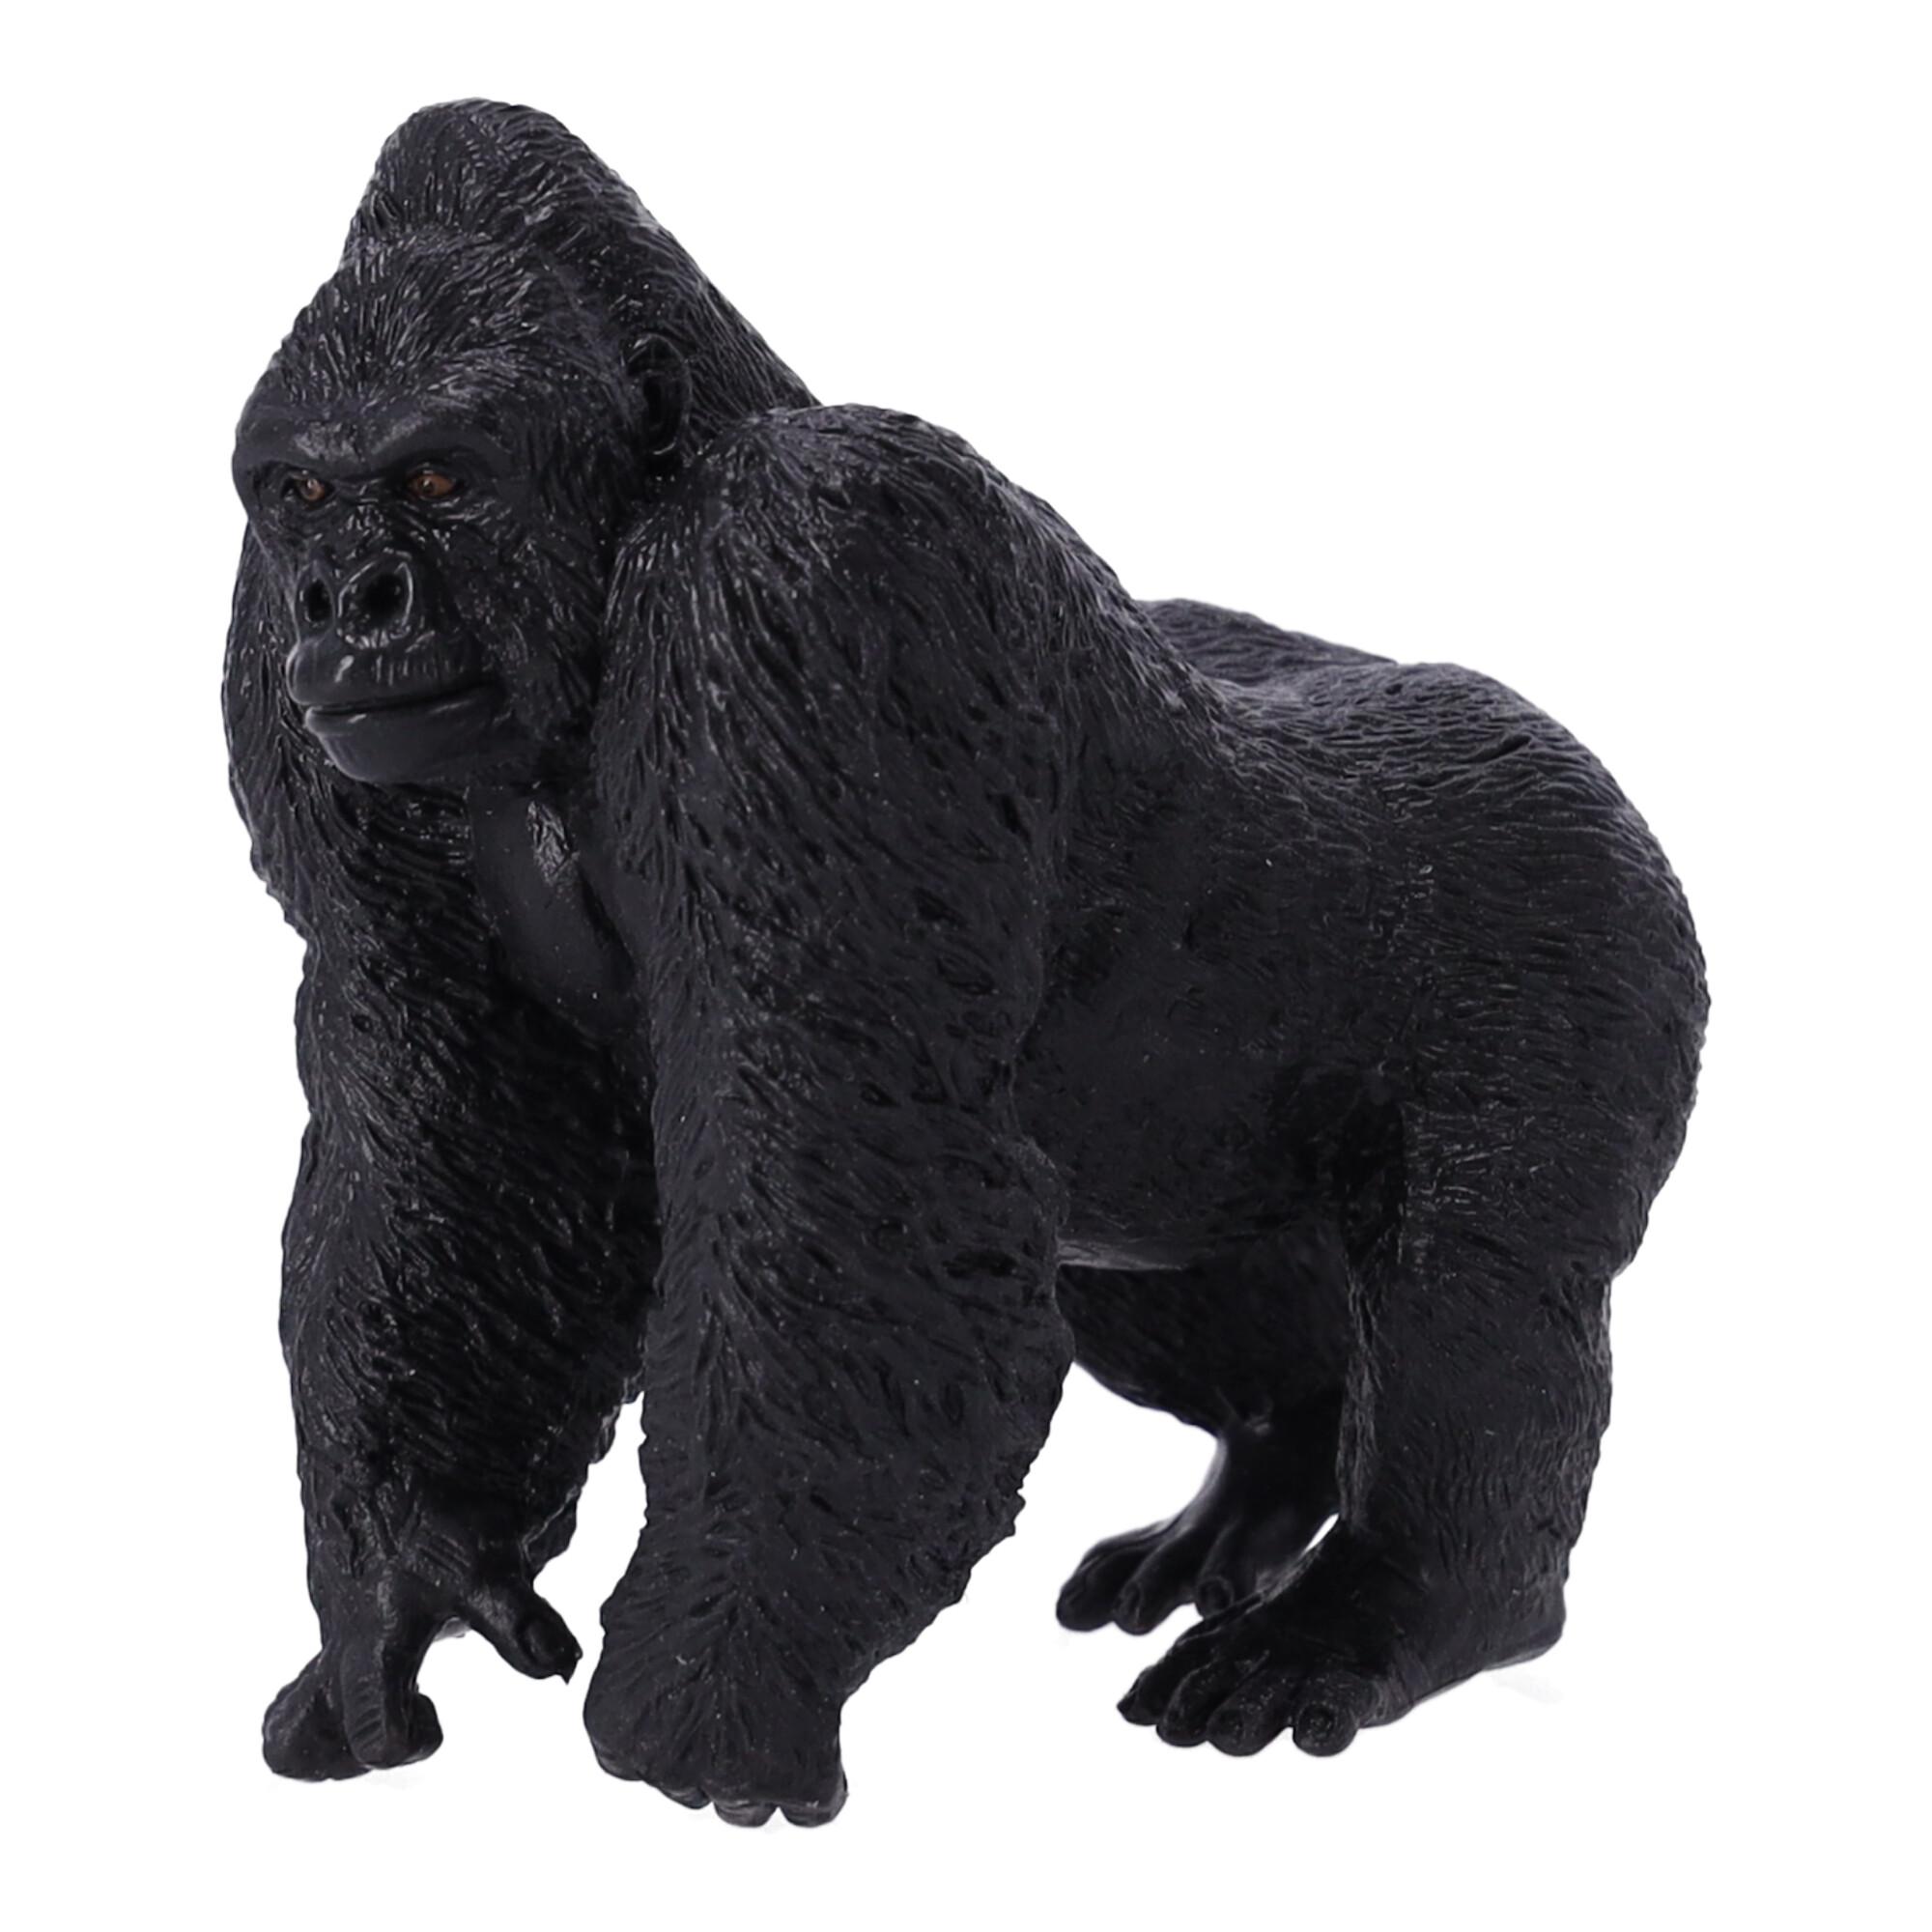 Collectible figurine Gorilla, Papo